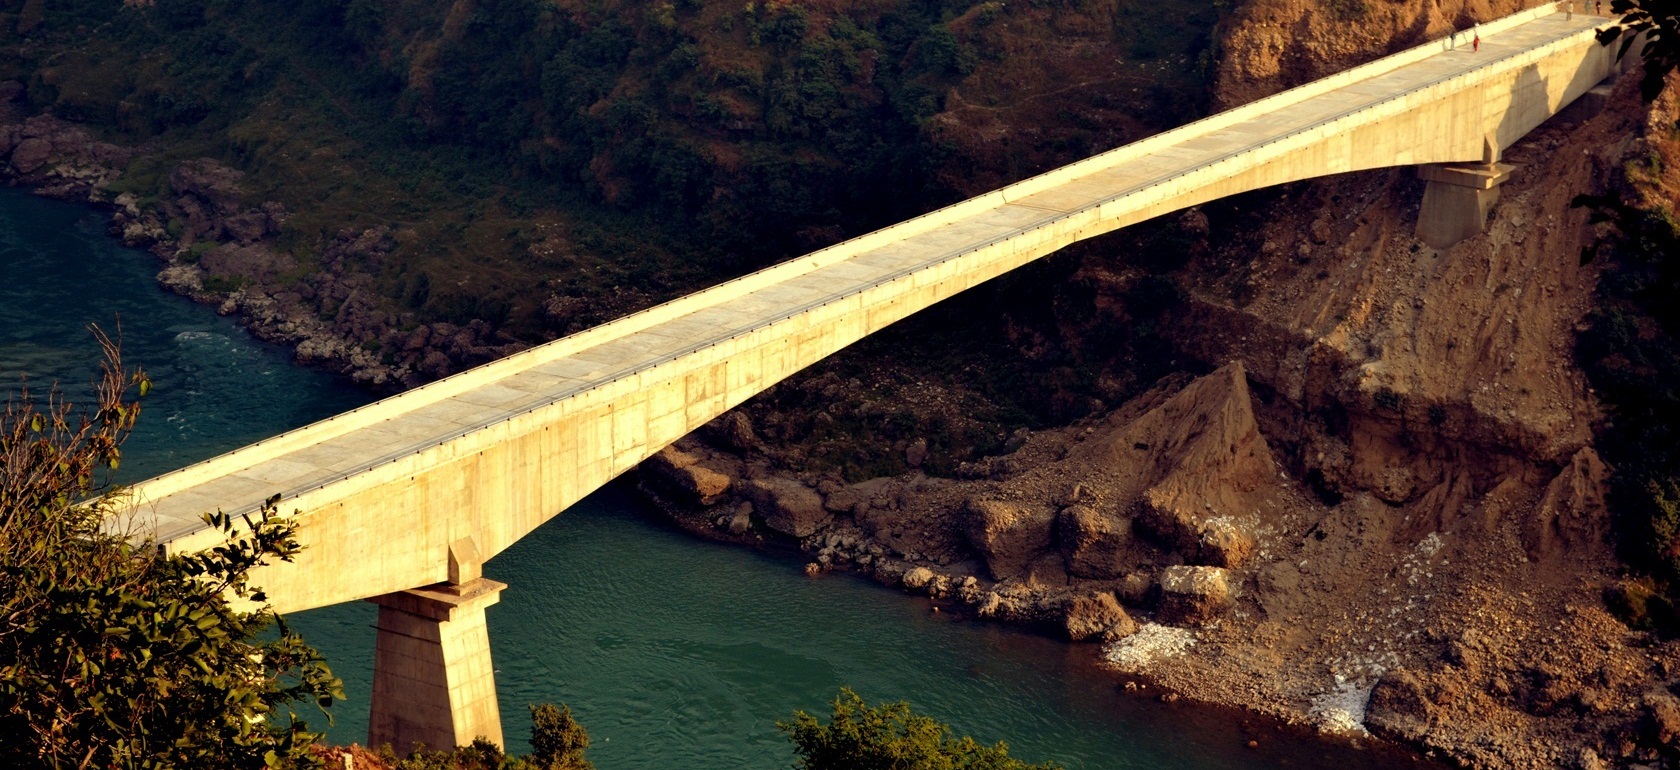 187m long Balanced Cantilever Bridge having 137m central span over river Chenab at Akhnoor, J&K